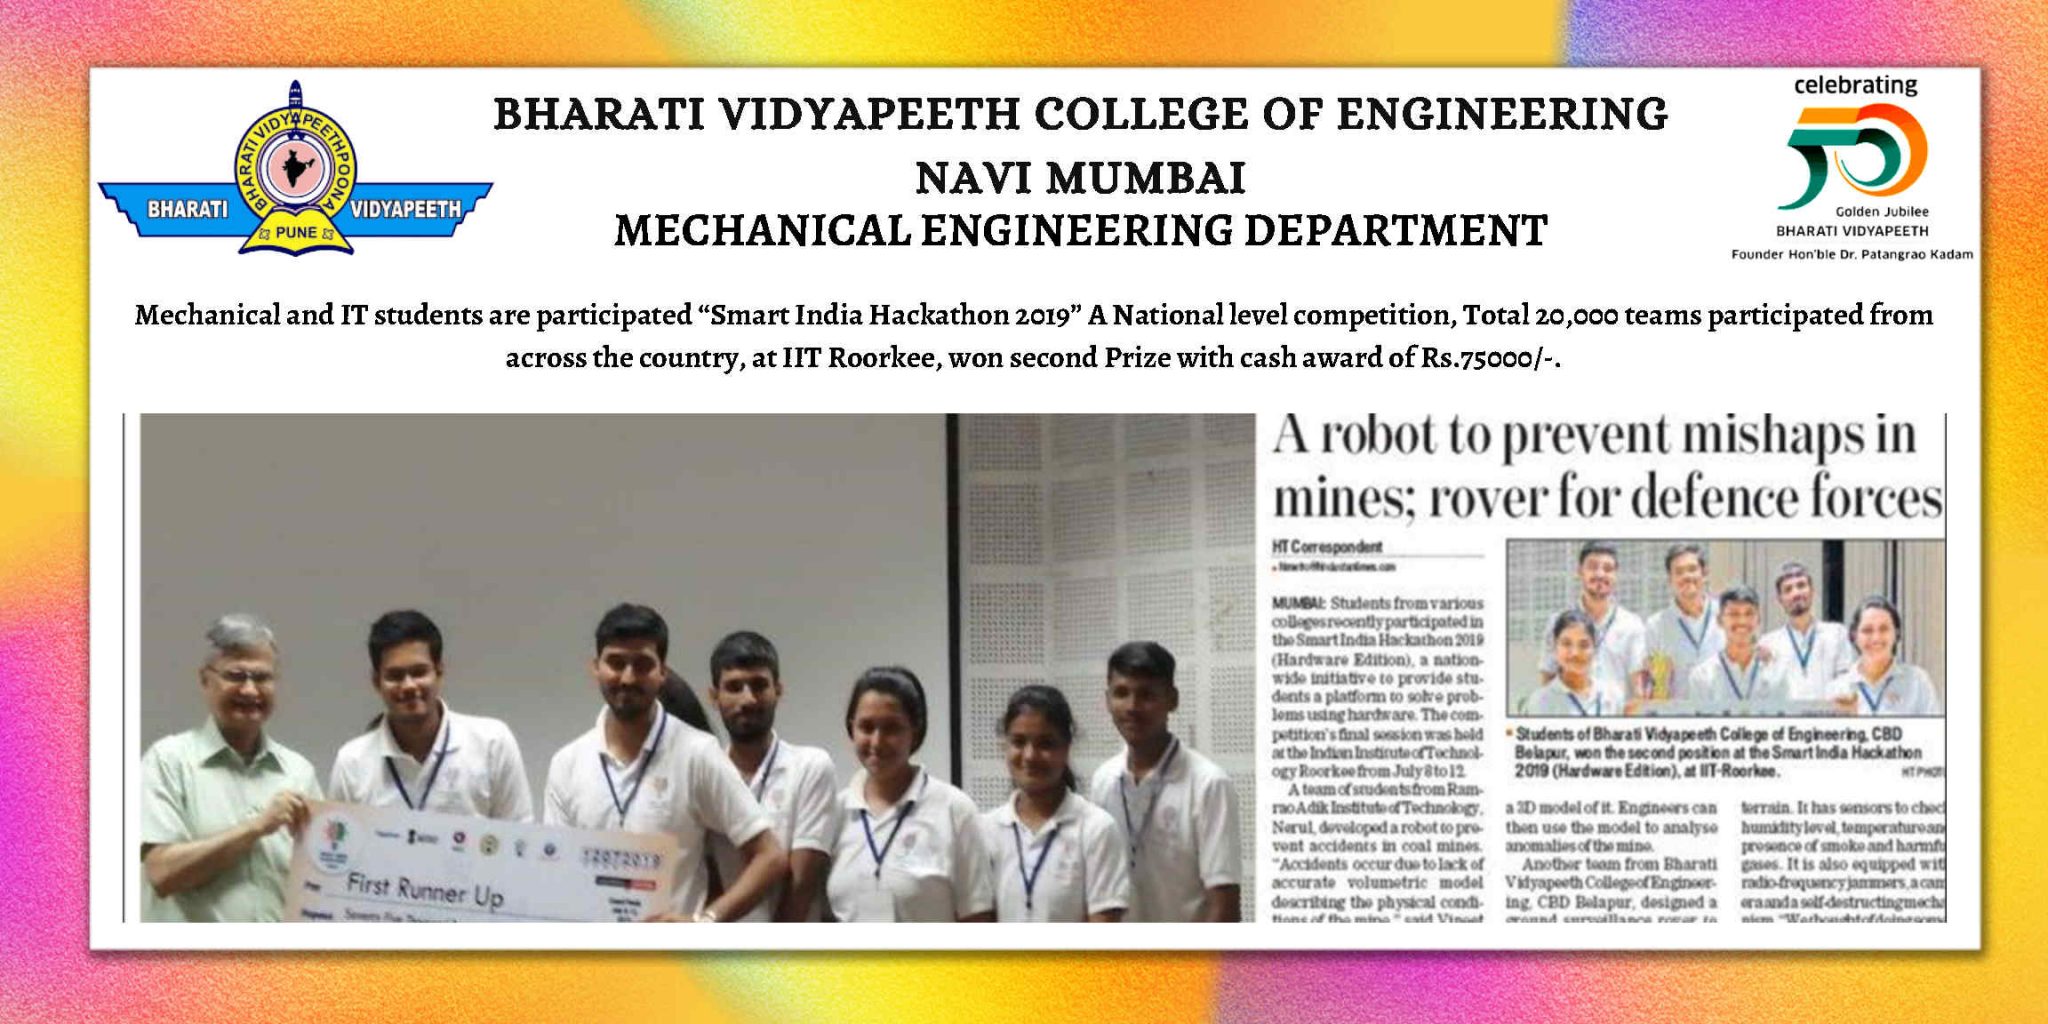 BHARATI VIDYAPEETH COLLEGE OF ENGINEERING NAVI MUMBAI_Page1